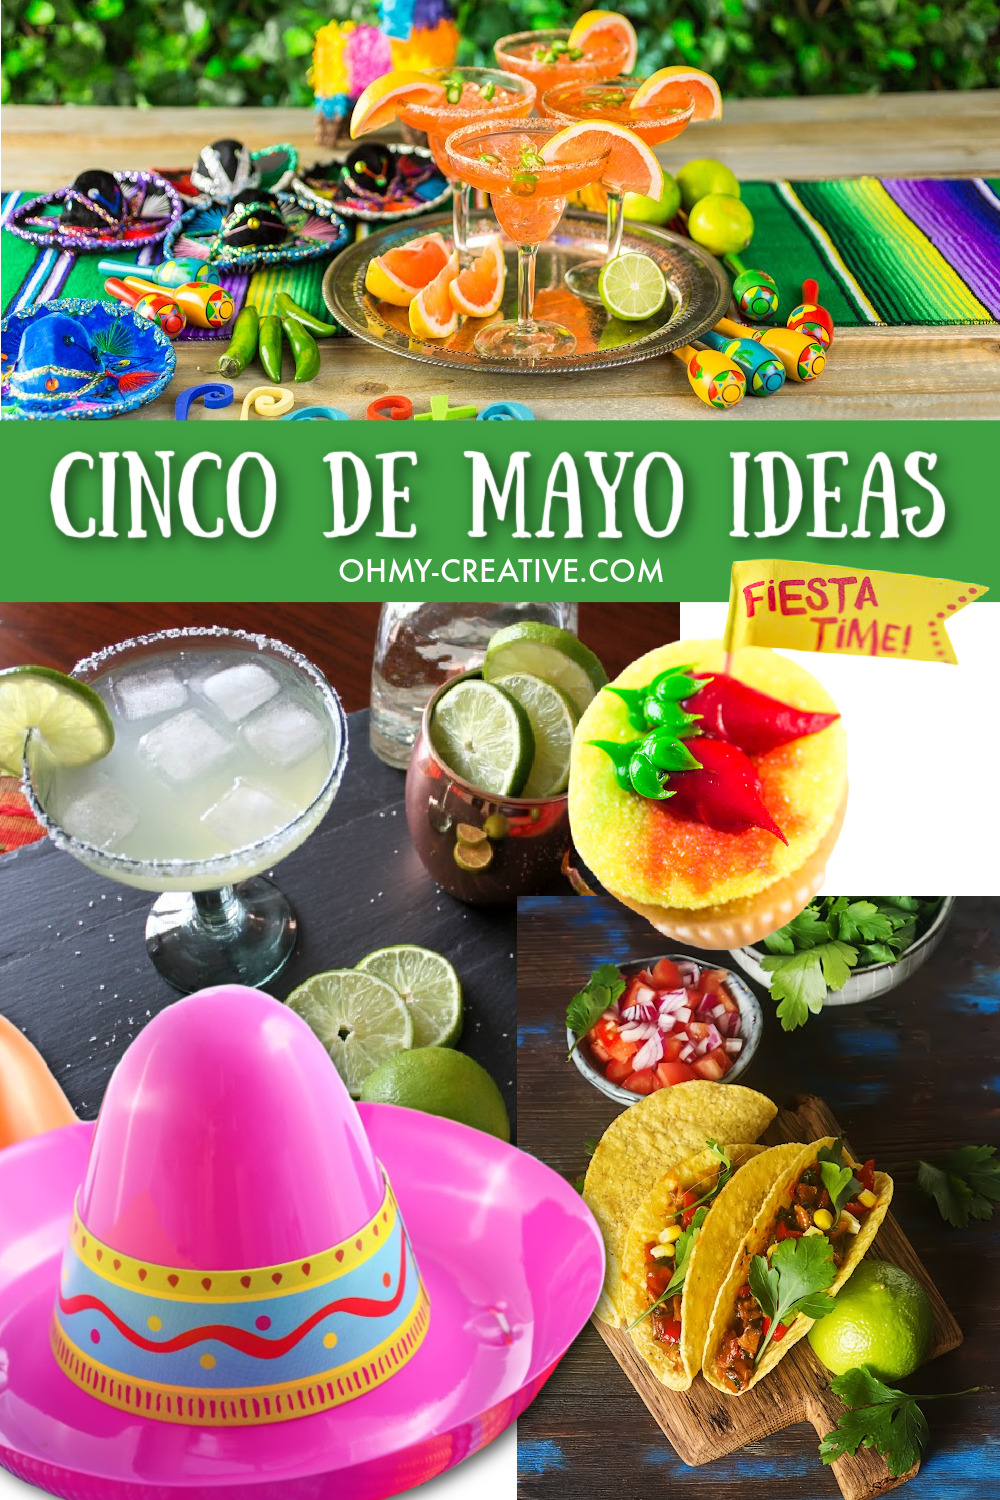 Festive Cinco de Mayo Ideas